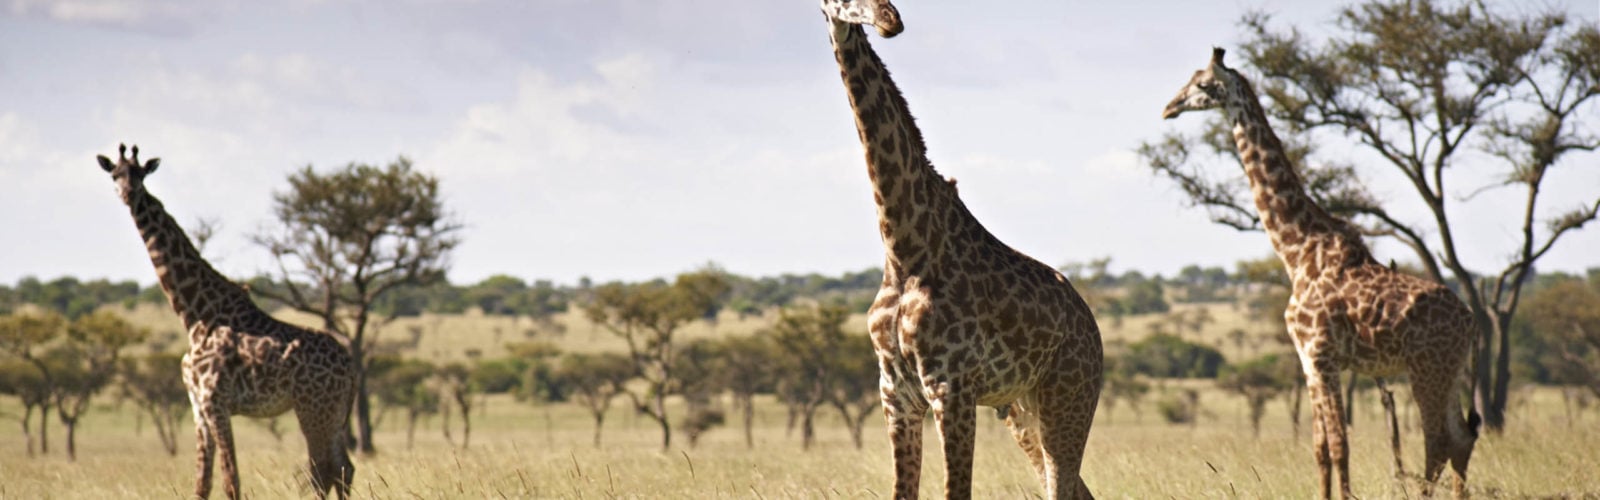 Giraffe Tanzania Serengeti